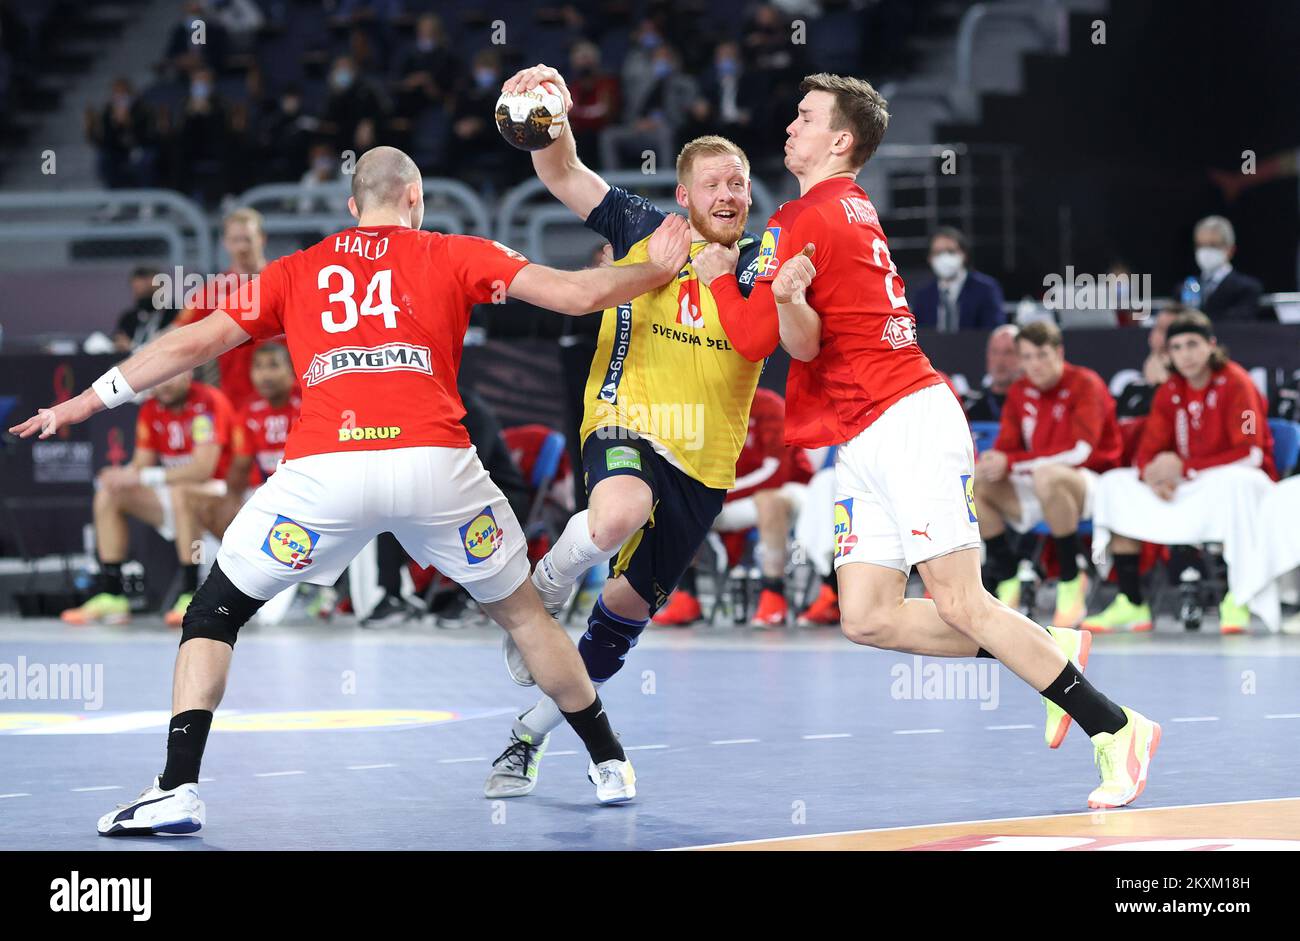 Egypt Defeats Croatia 31-22 in Handball World Championship